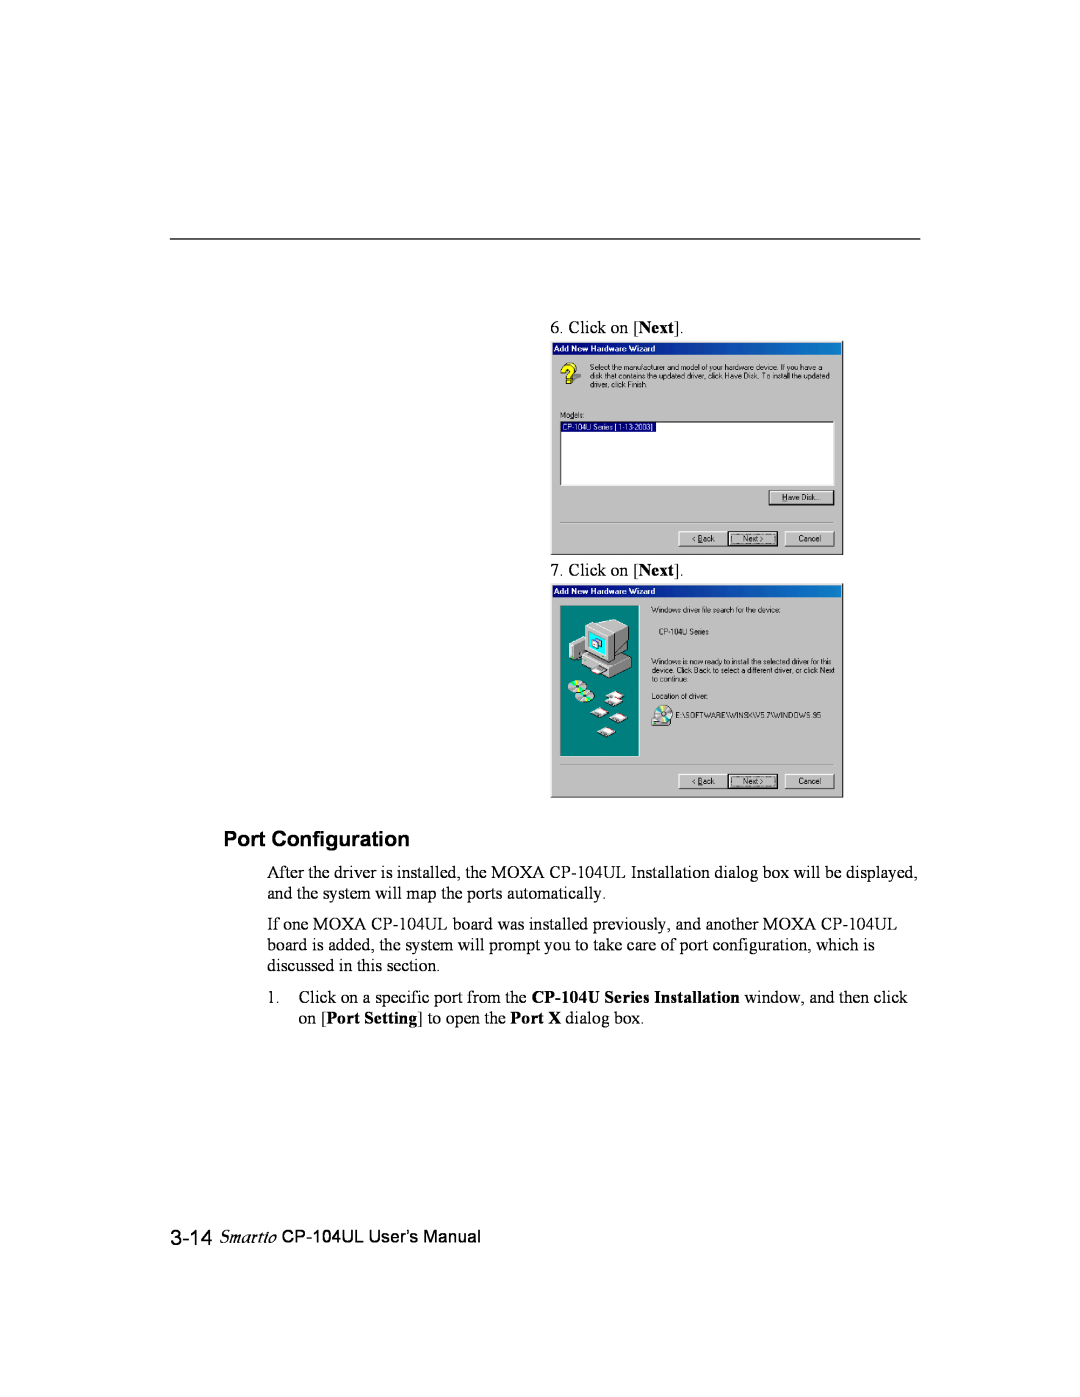 Moxa Technologies user manual Port Configuration, Smartio CP-104UL User’s Manual 